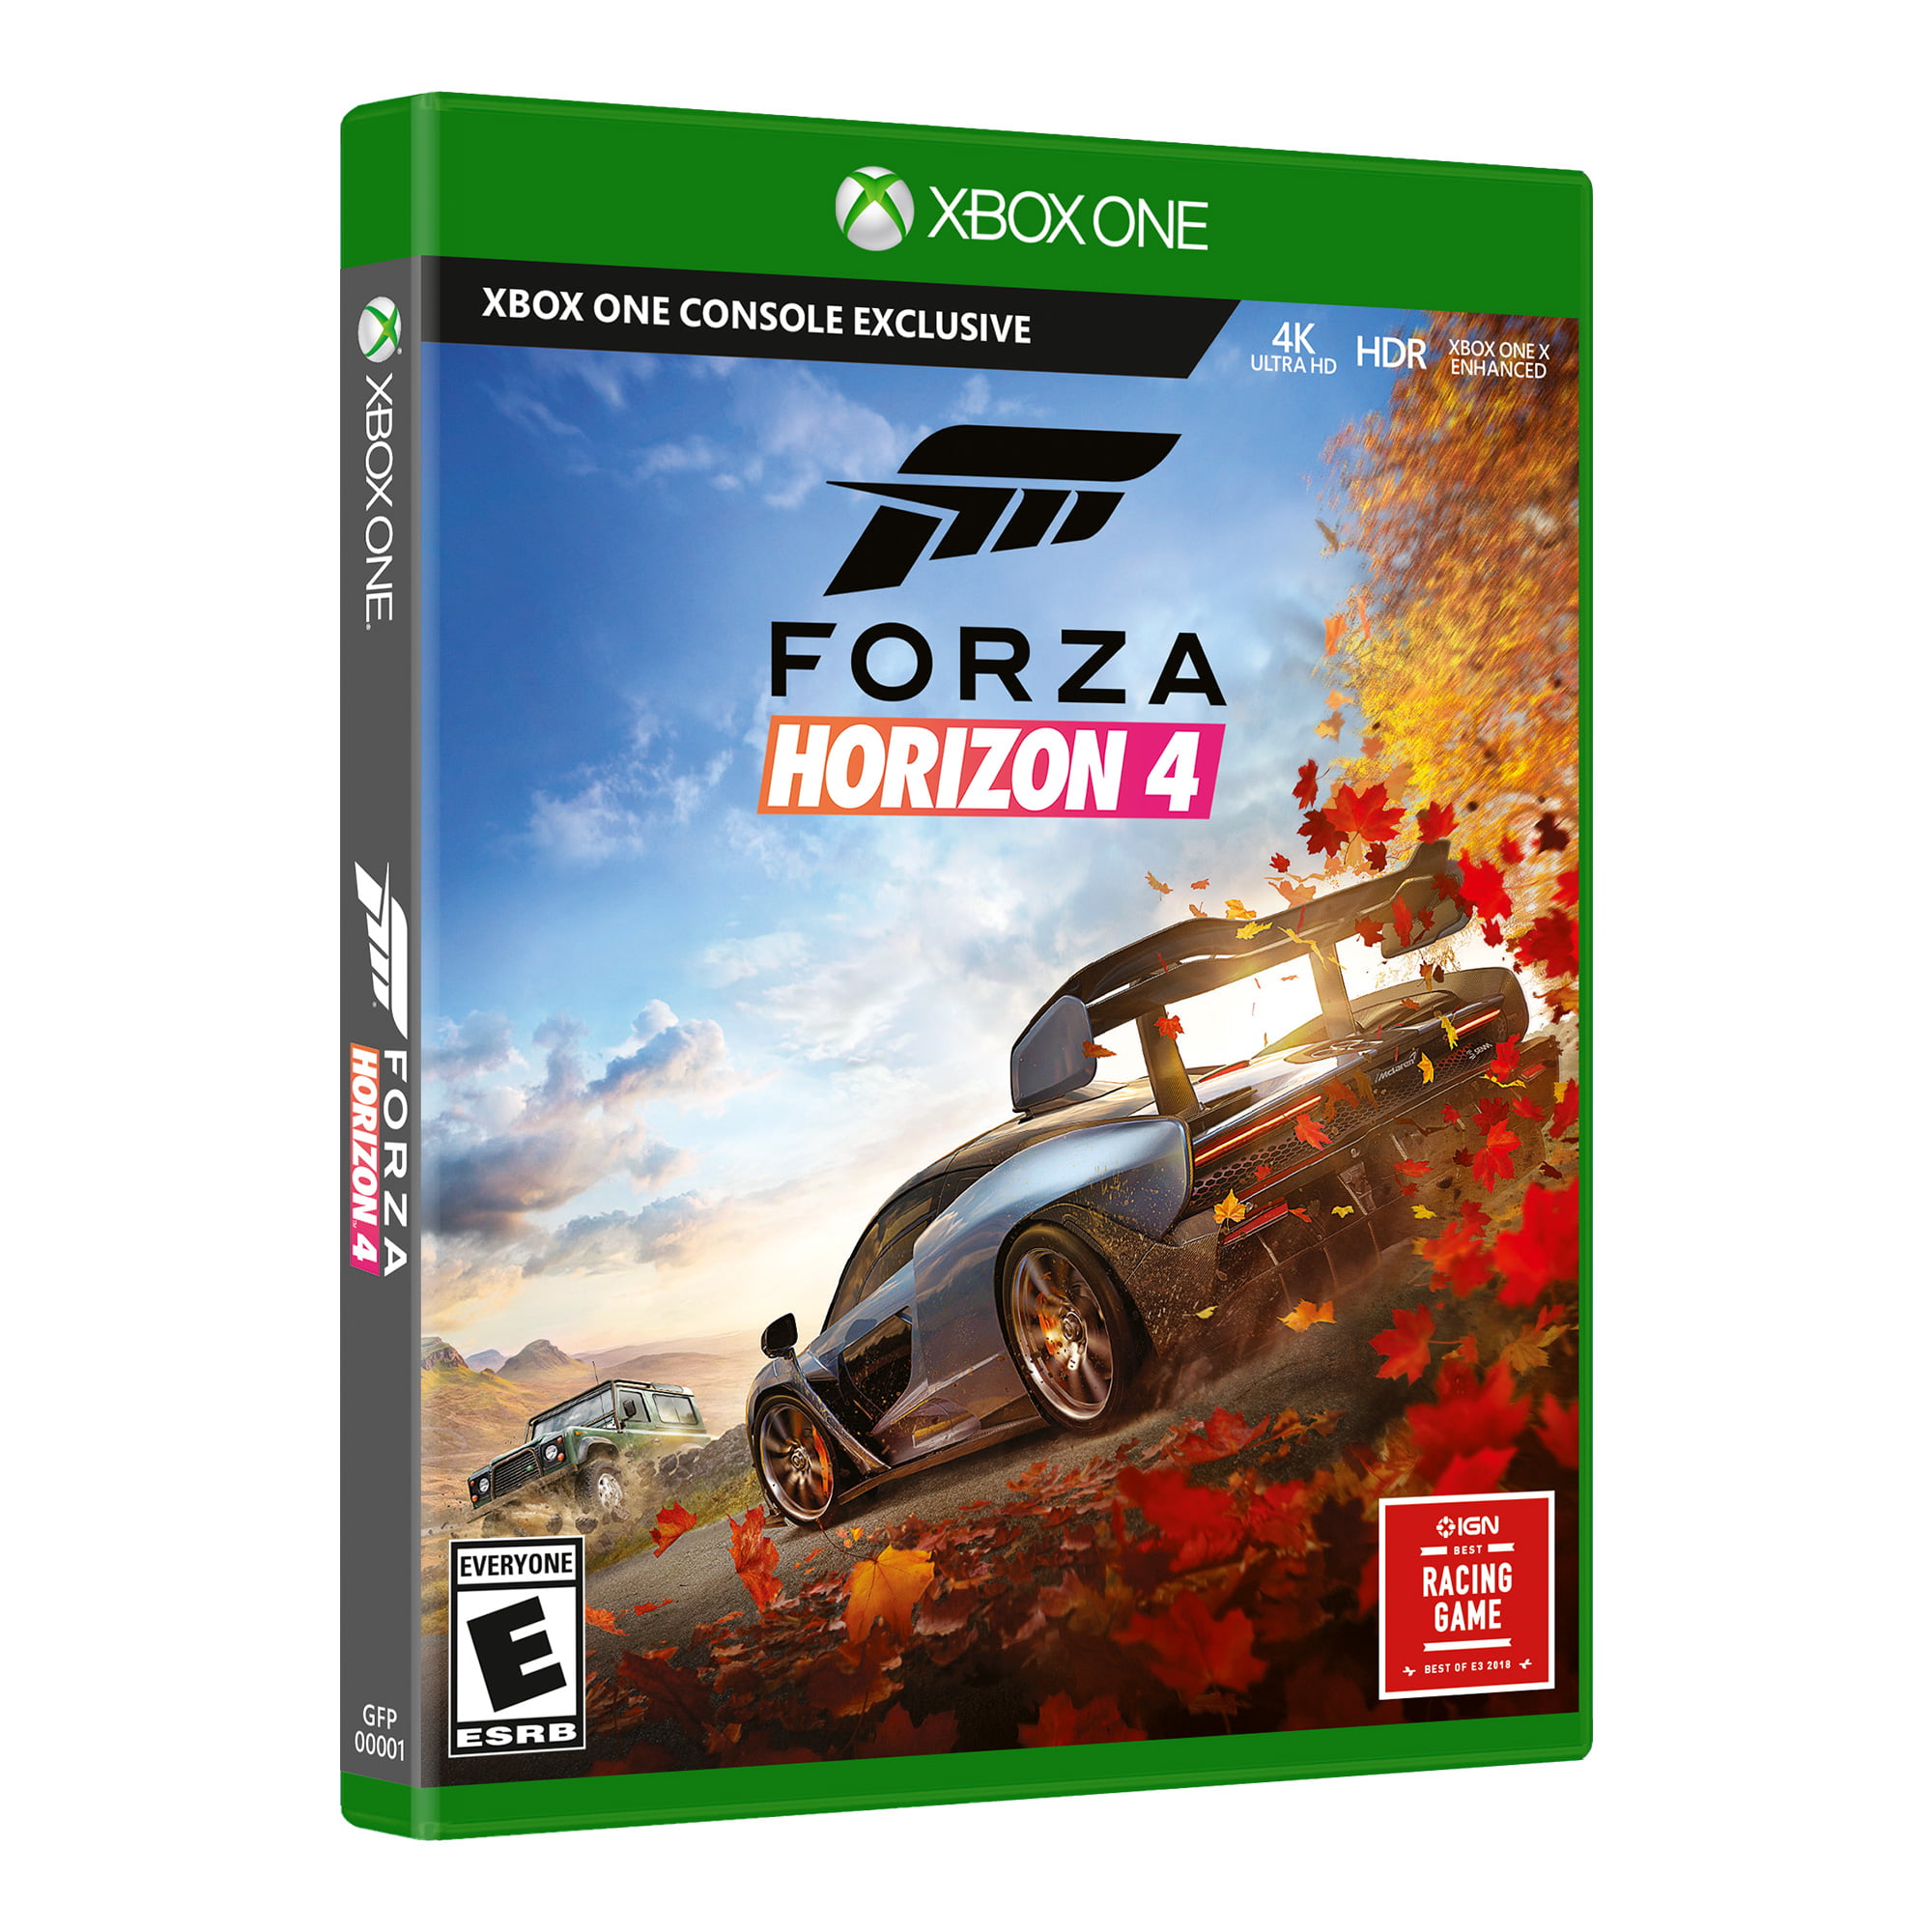 rand Bestrooi rivier Forza Horizon 4, Microsoft, Xbox One, 889842392357 - Walmart.com